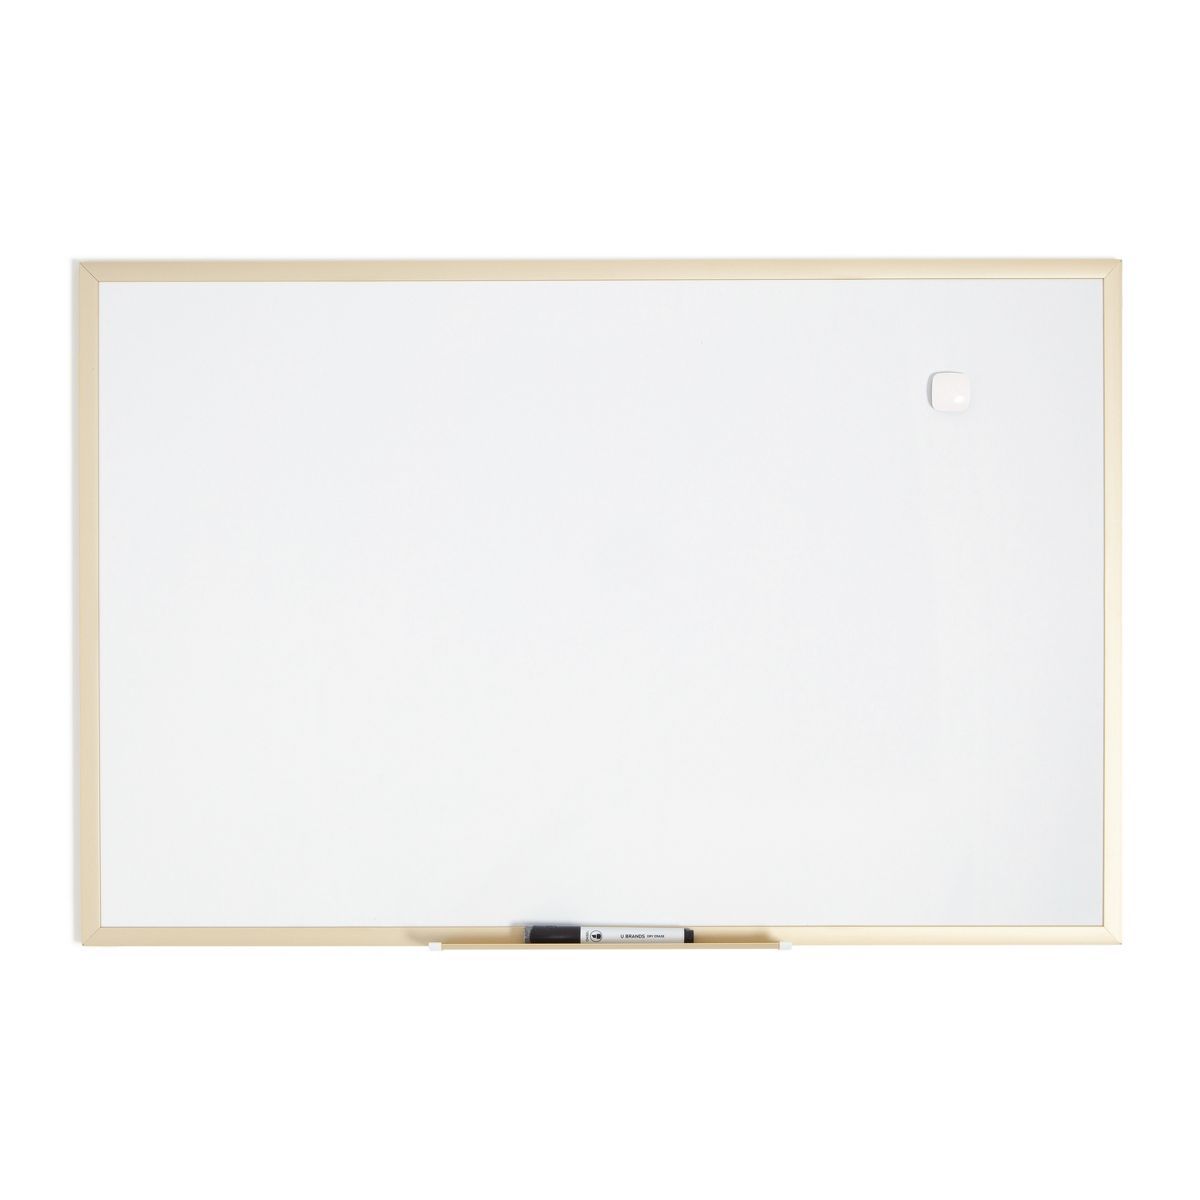 U Brands 23"x35" Magnetic Dry Erase Board with Marker | Target